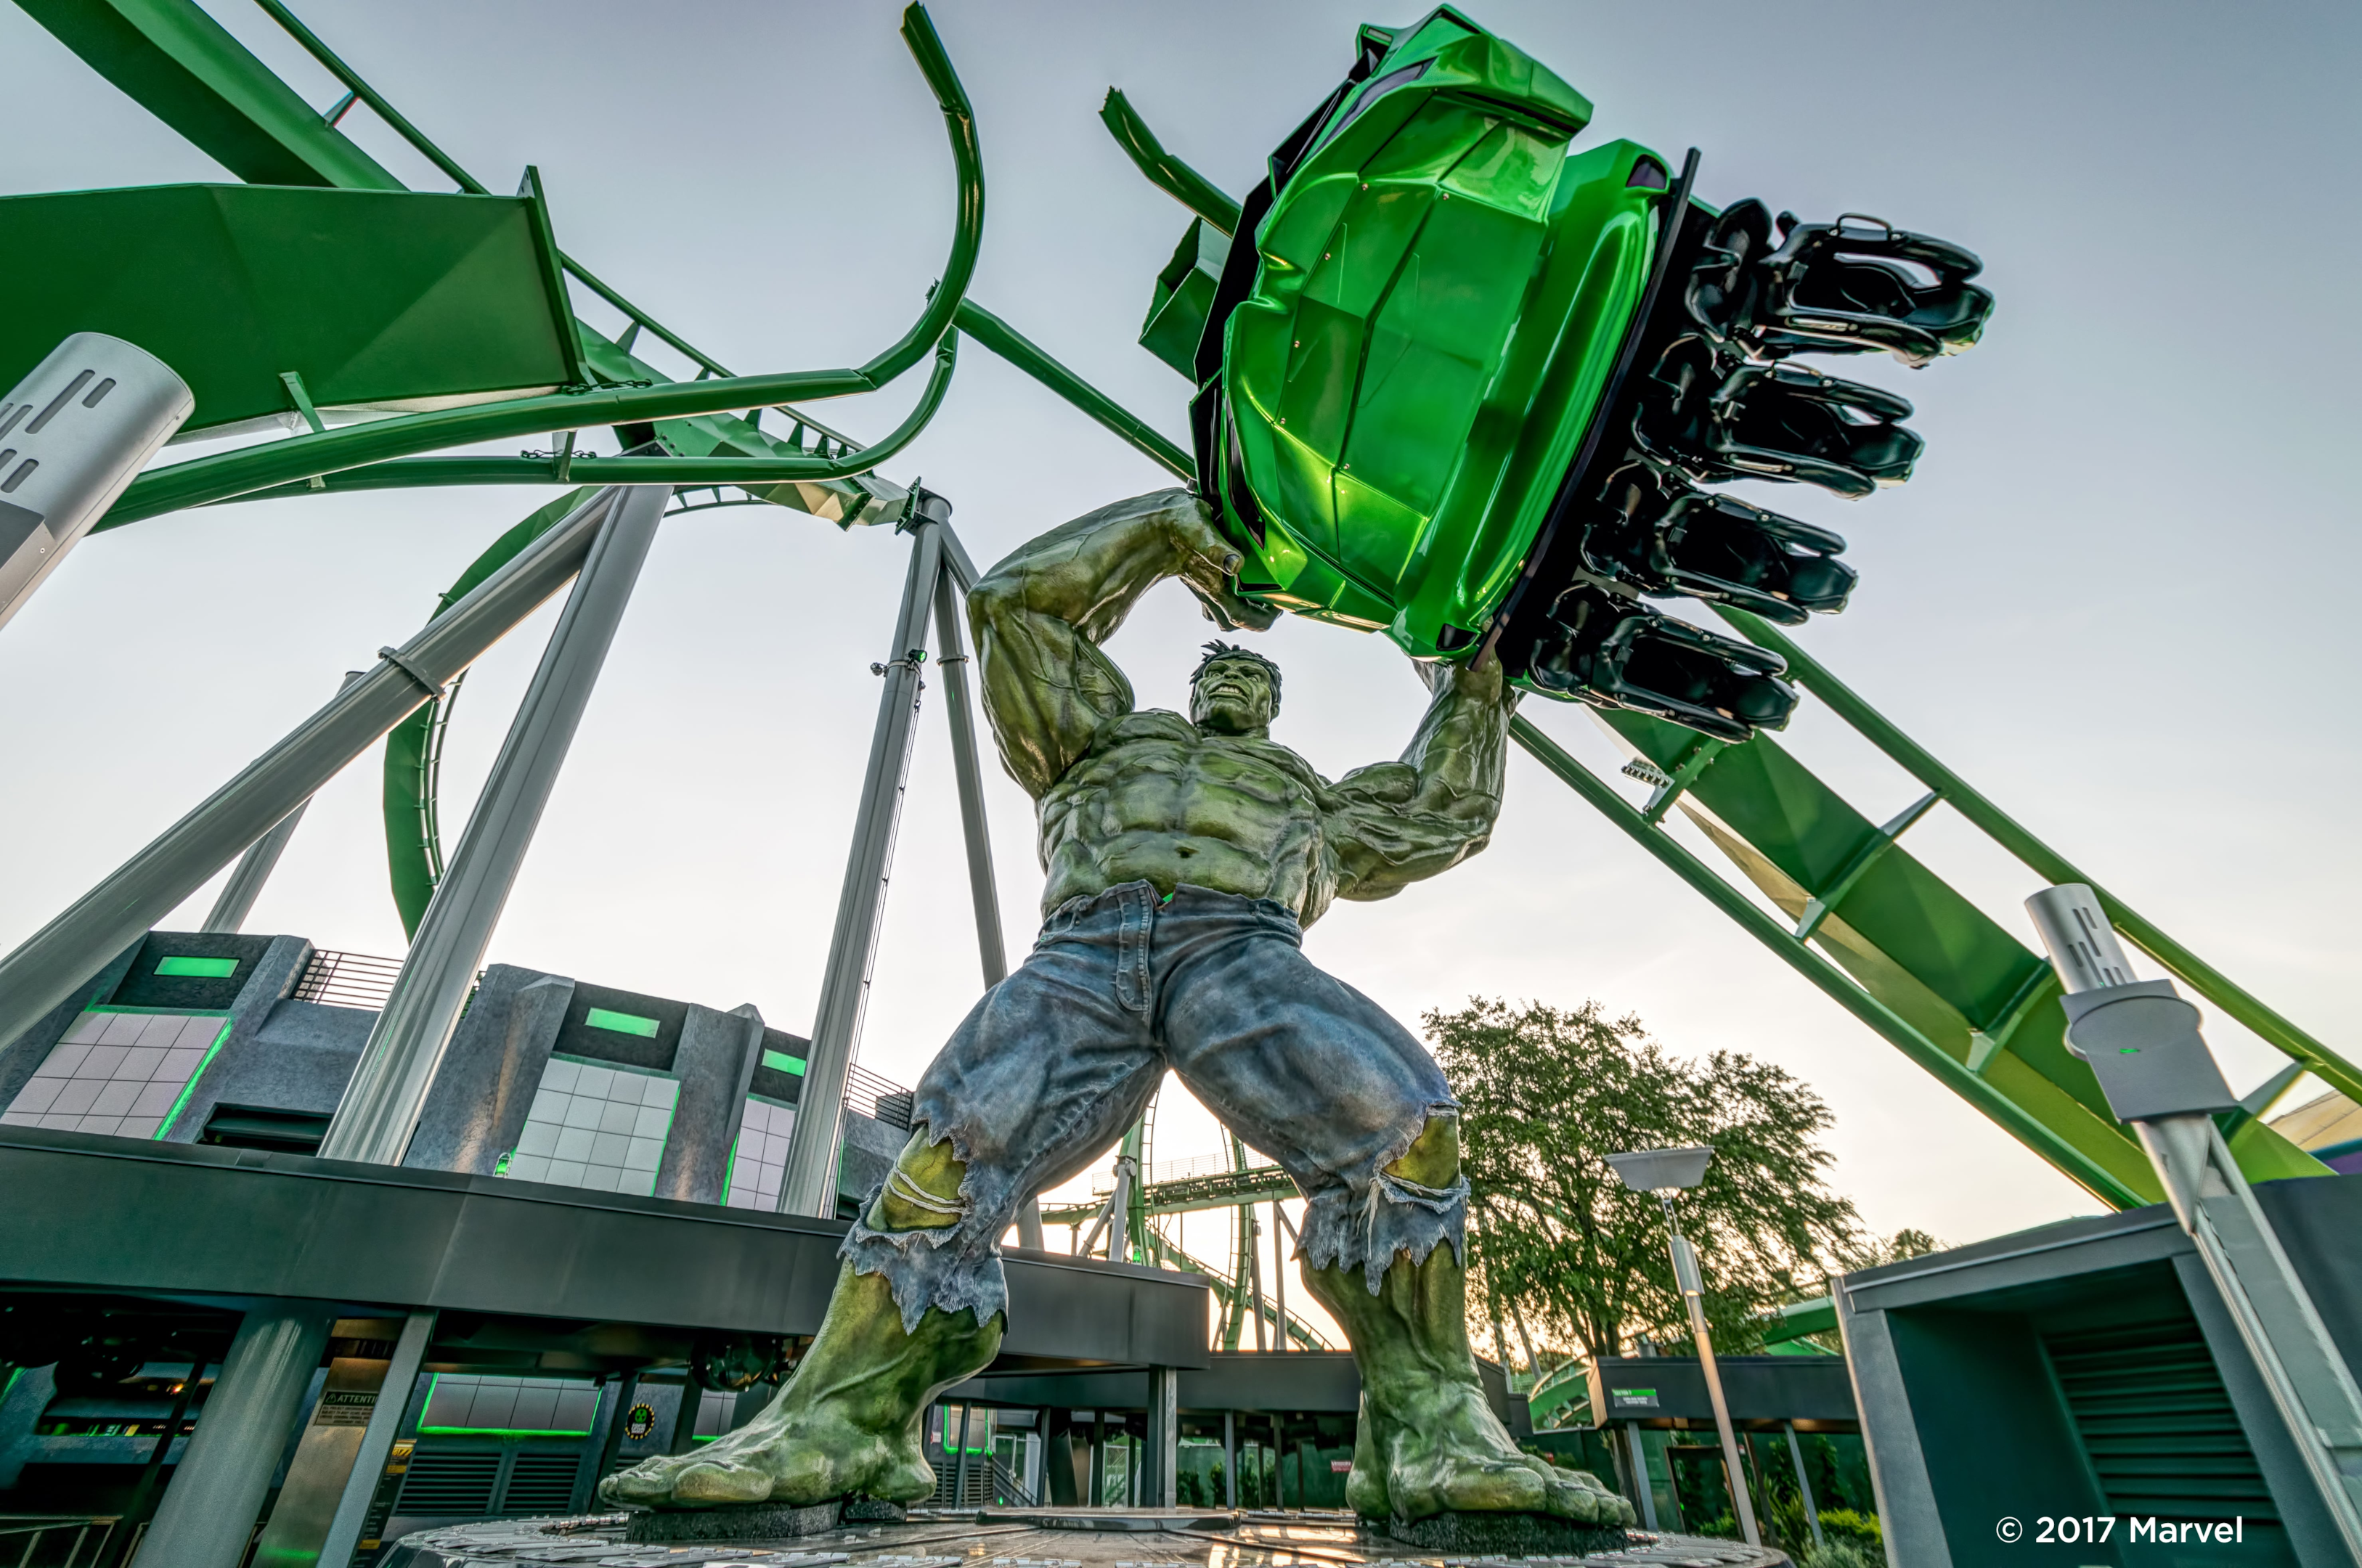 Hulk themed roller coaster with Hulk sculpture